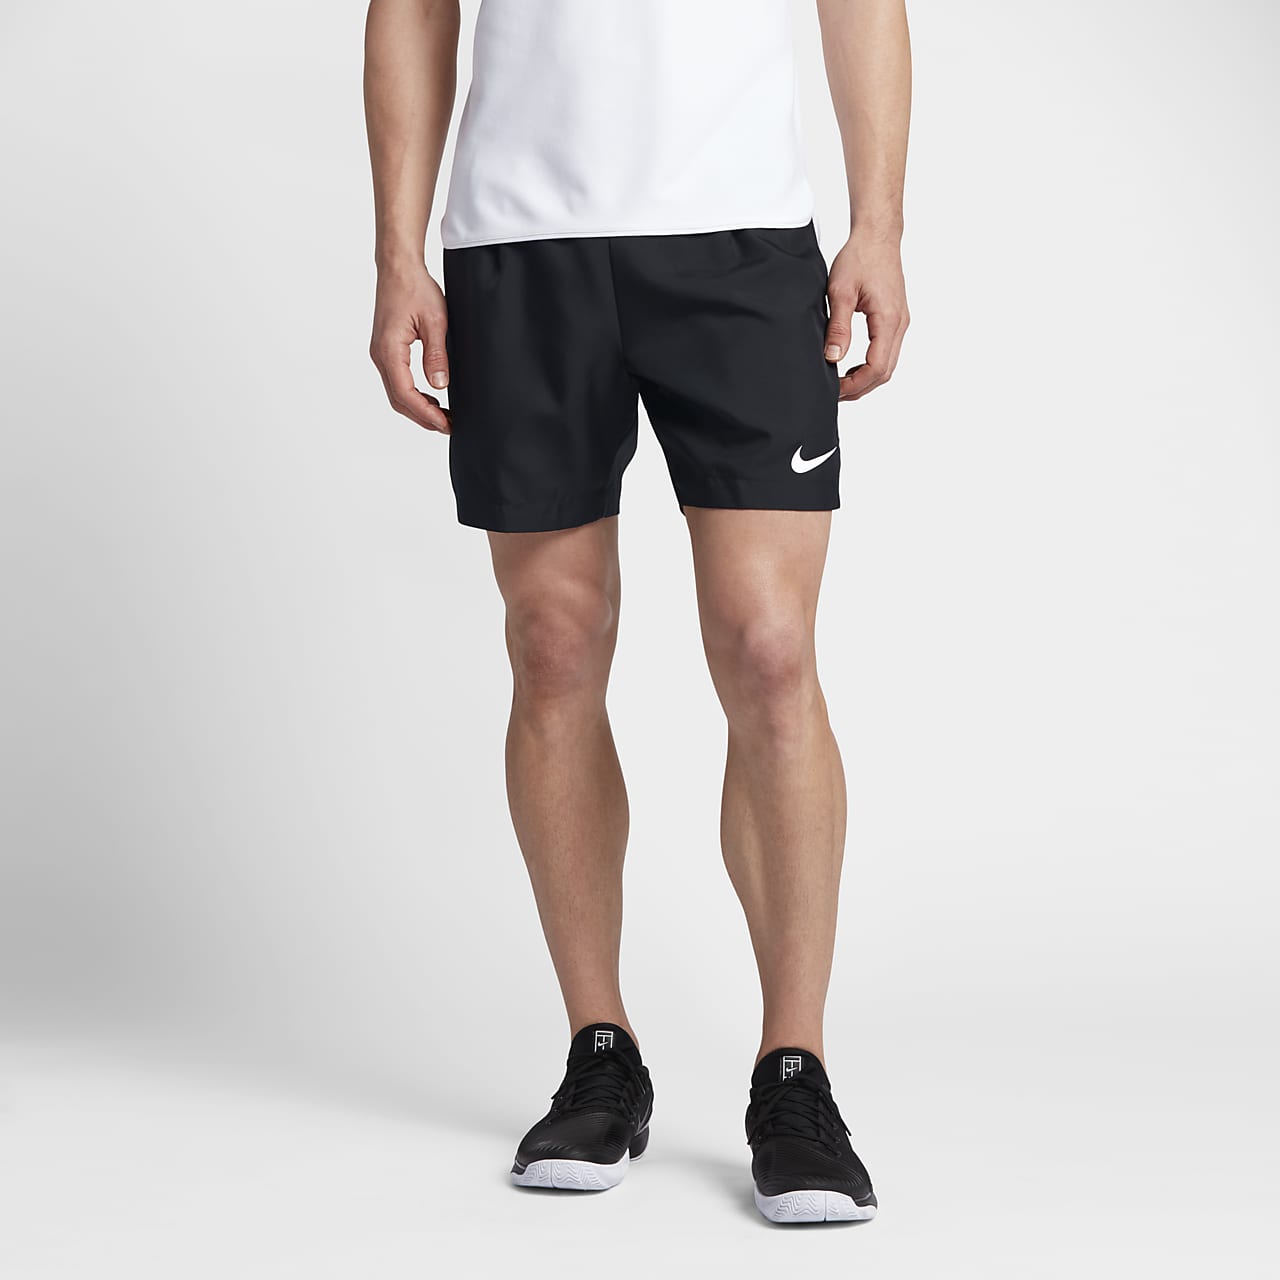 Discreet Airco Historicus NikeCourt Dry Men's 7" (18cm approx.) Tennis Shorts. Nike ID